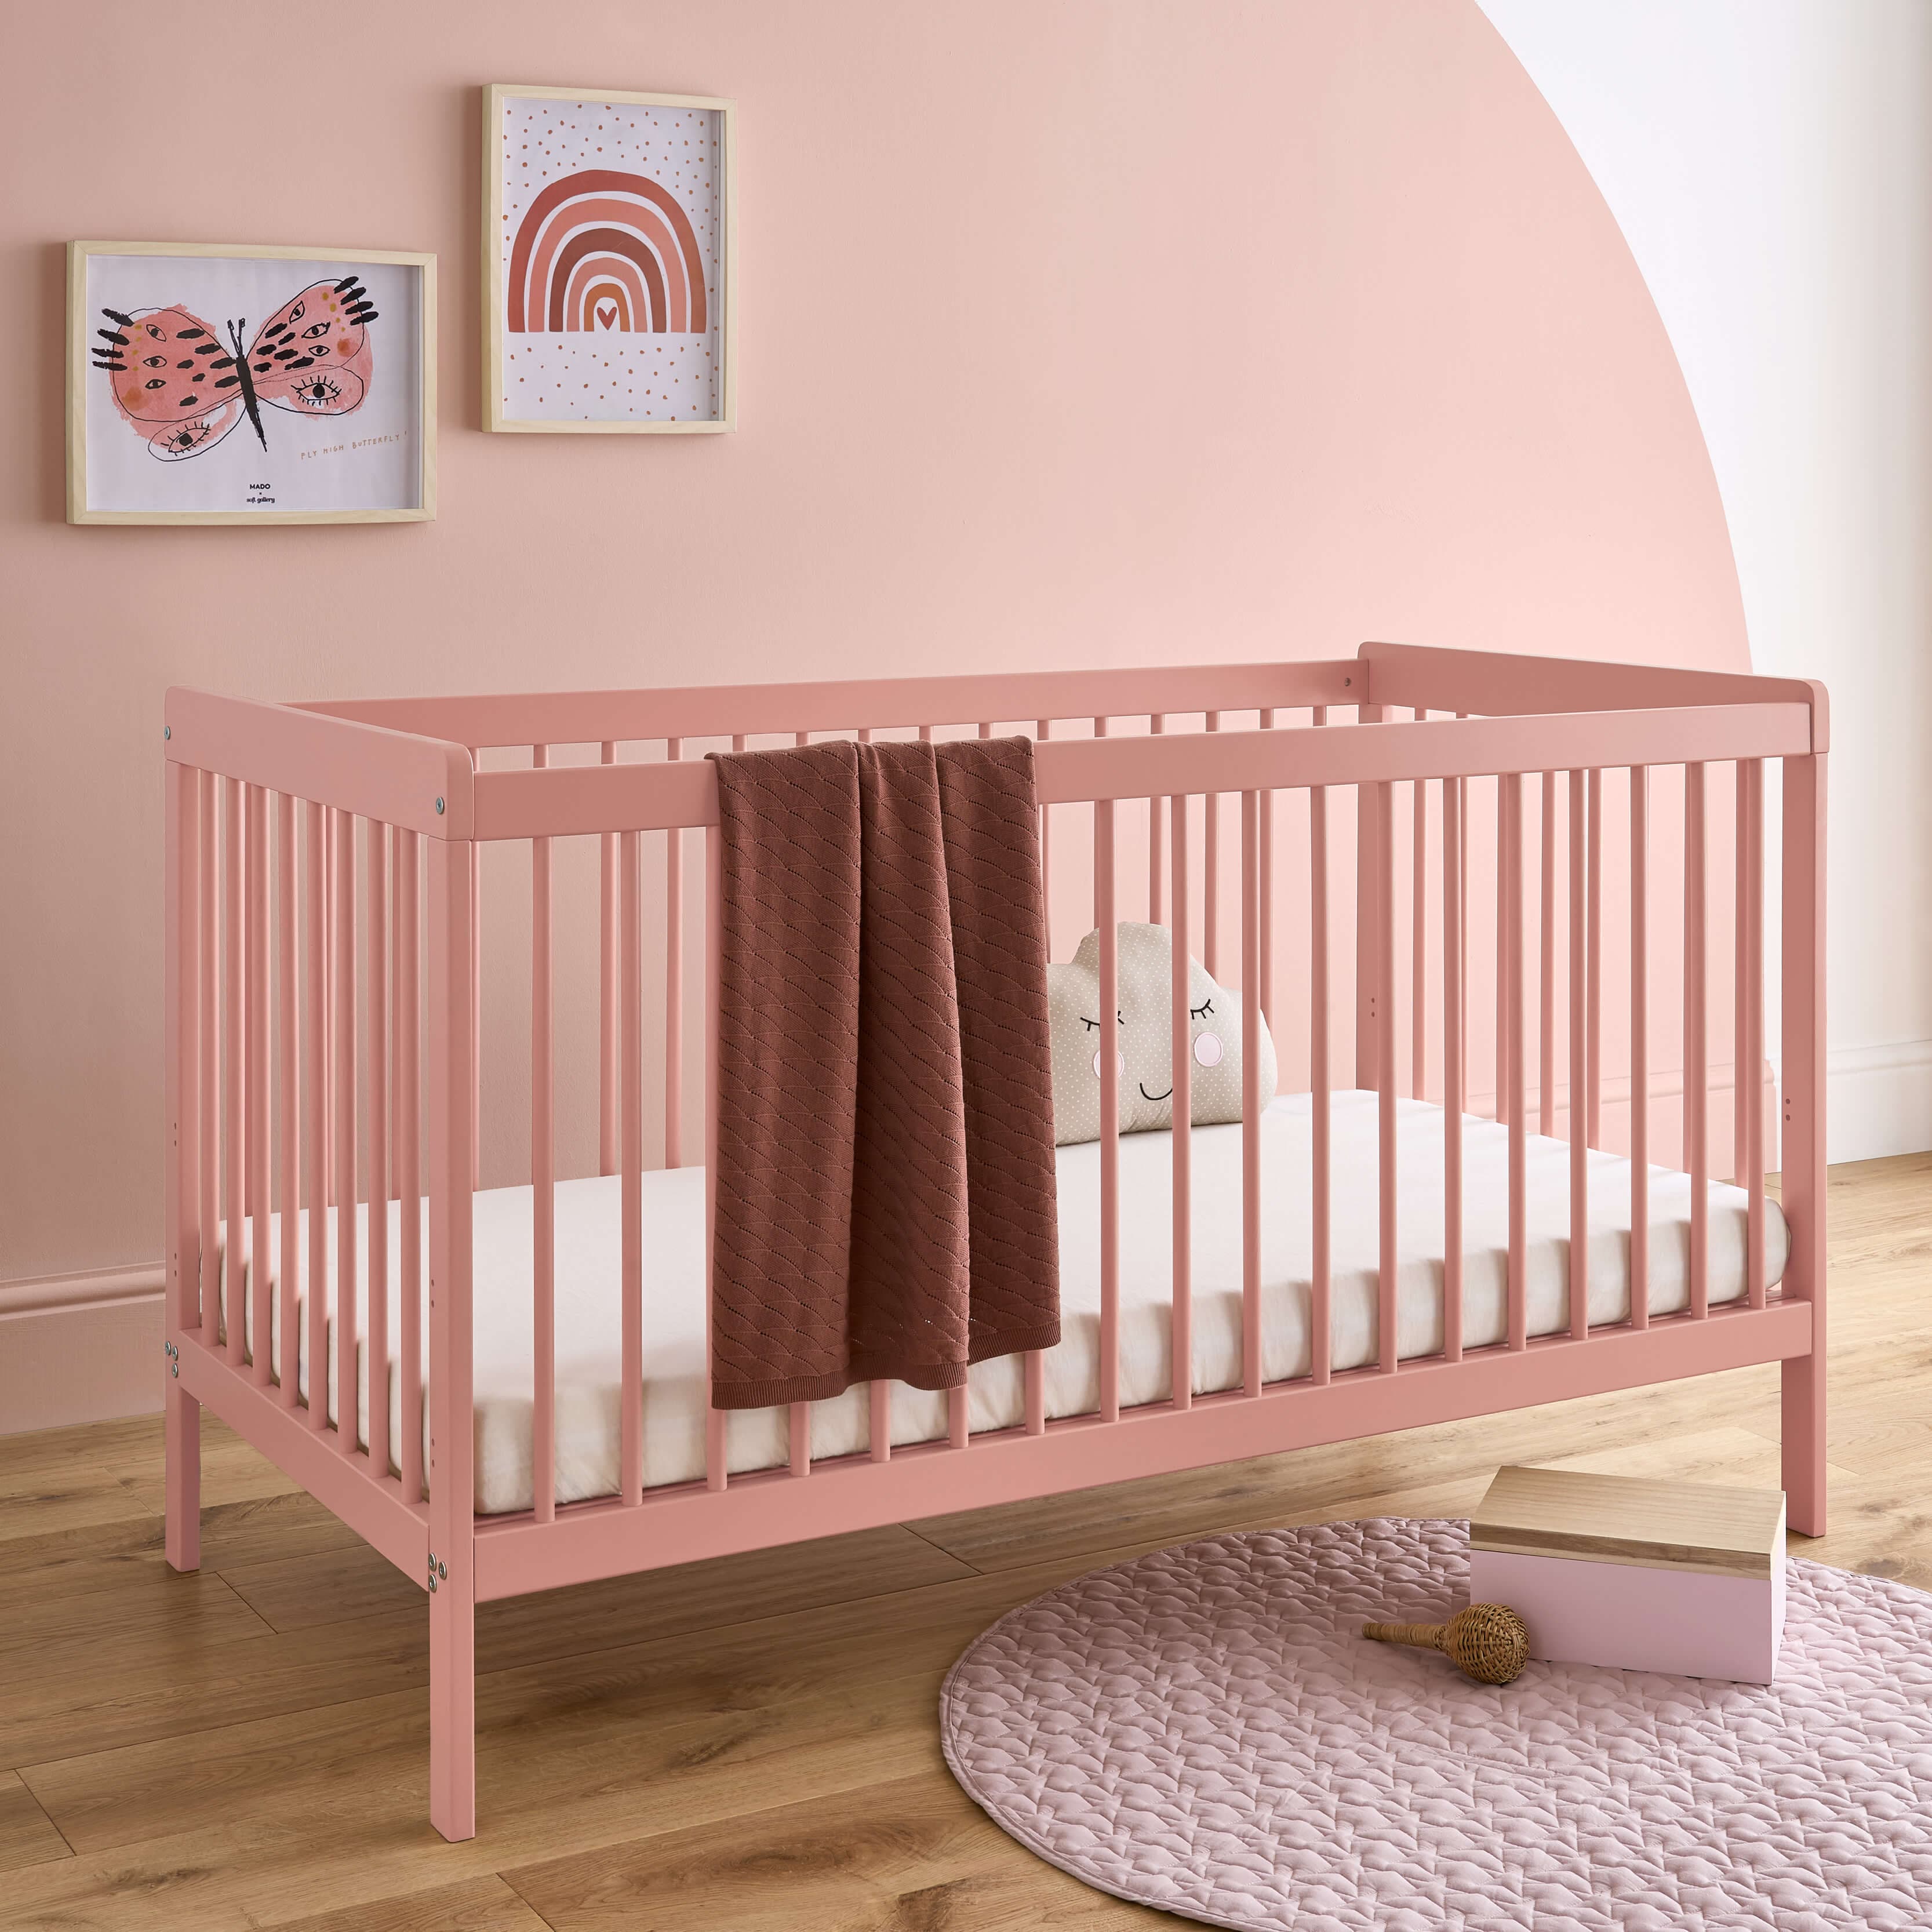 CuddleCo Nursery Room Sets CuddleCo Nola Cot Bed - Soft Blush